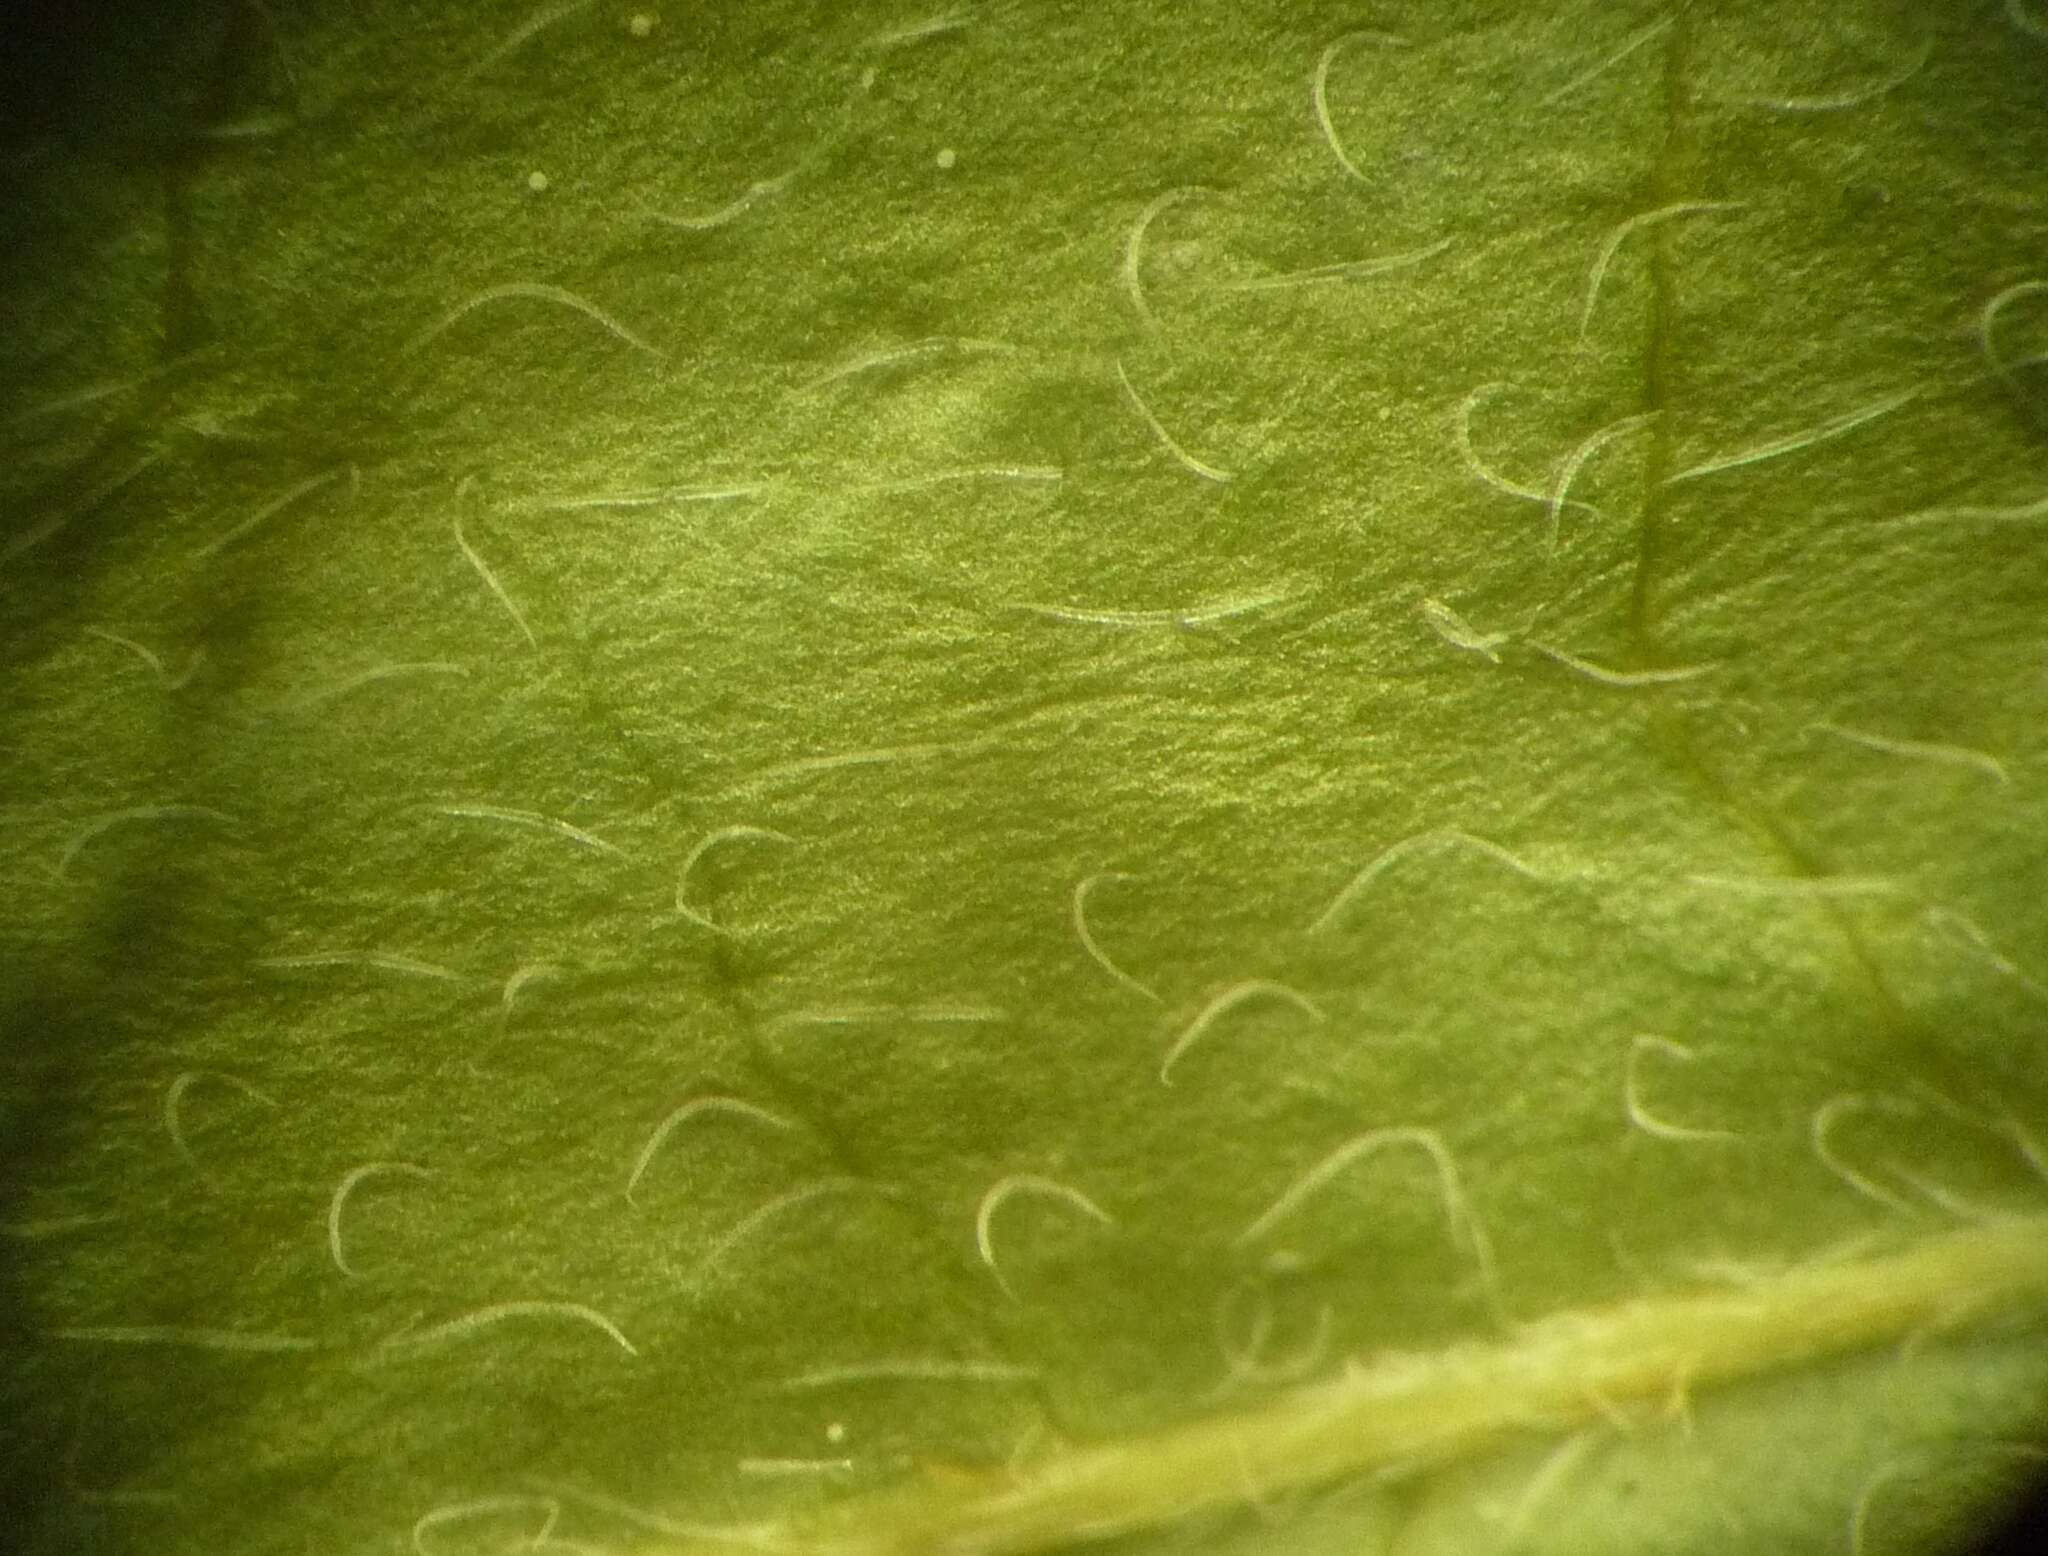 Imagem de Cornus sanguinea subsp. hungarica (Kárpáti) Soó